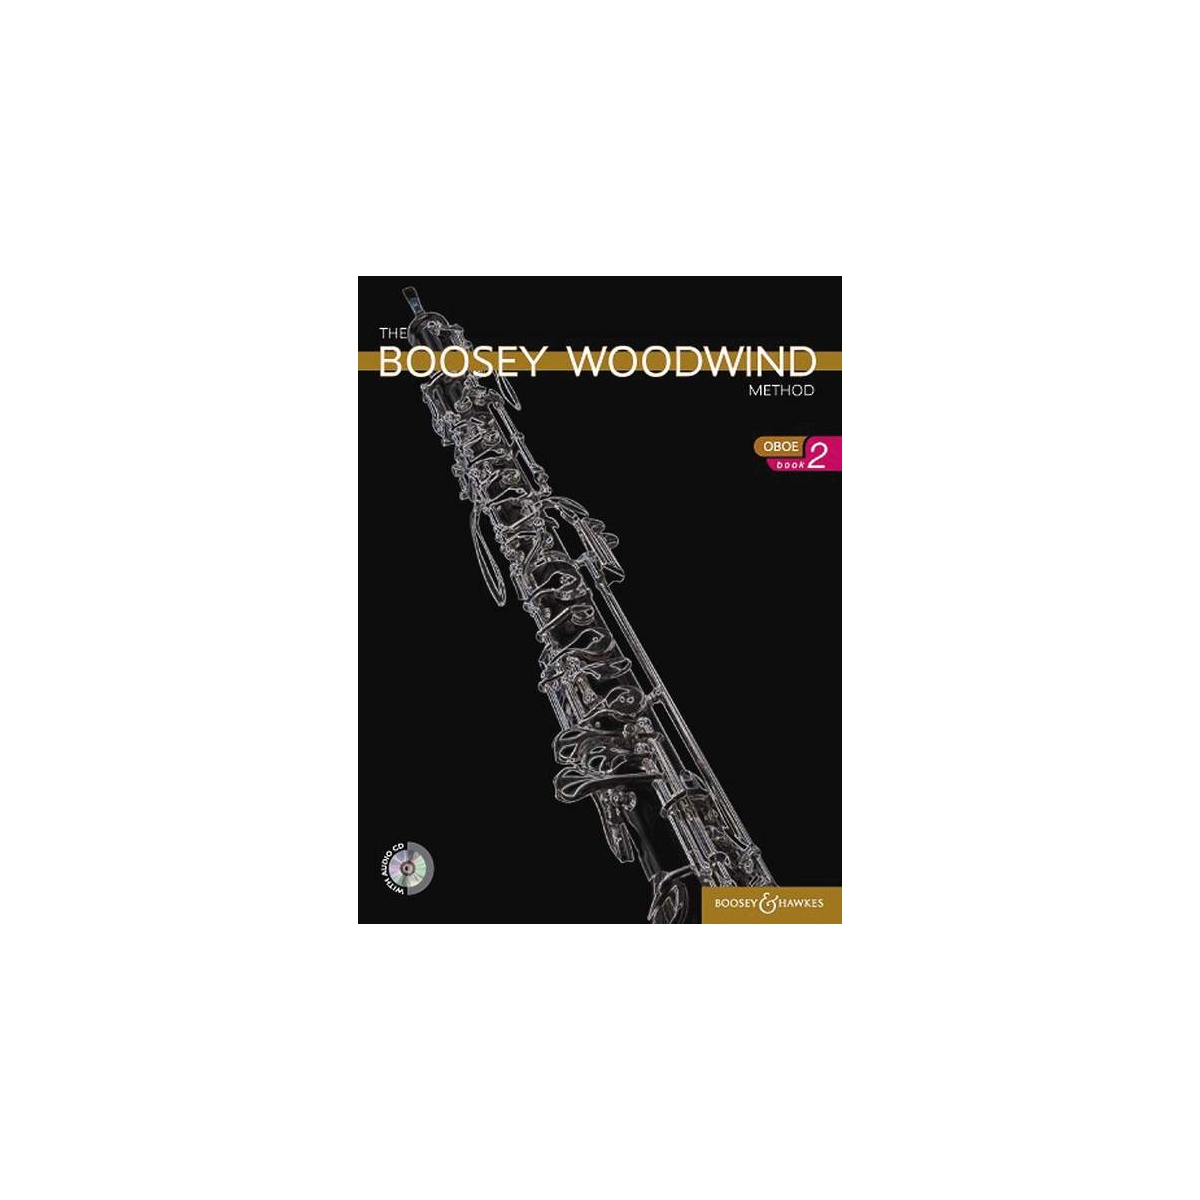 The Boosey Woodwind Method [Oboe] Book 2